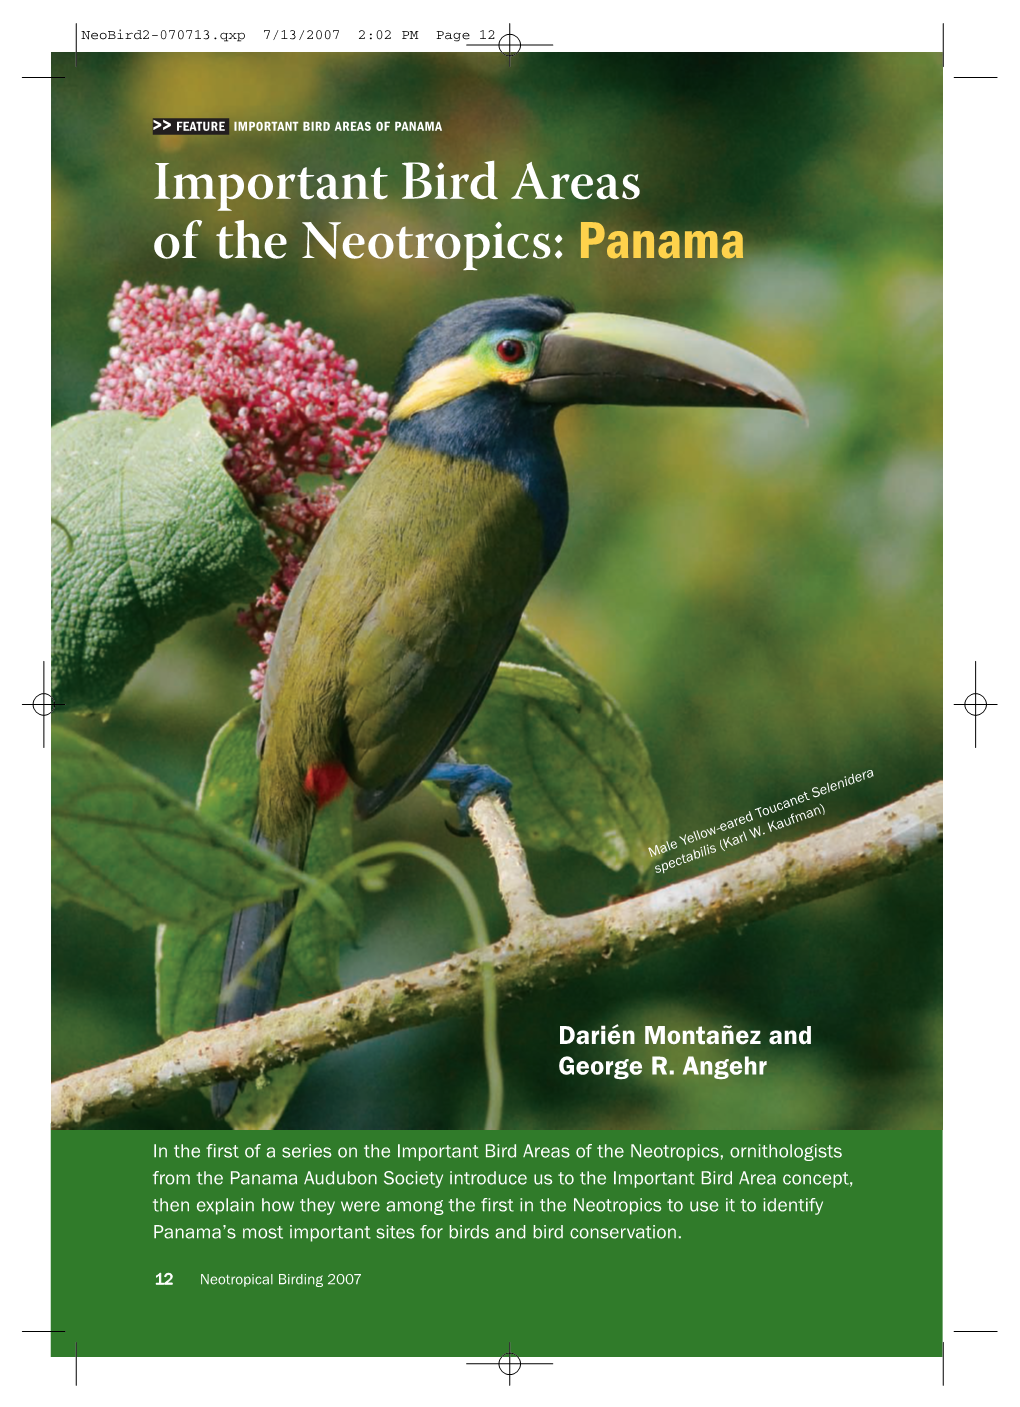 PANAMA Important Bird Areas of the Neotropics: Panama